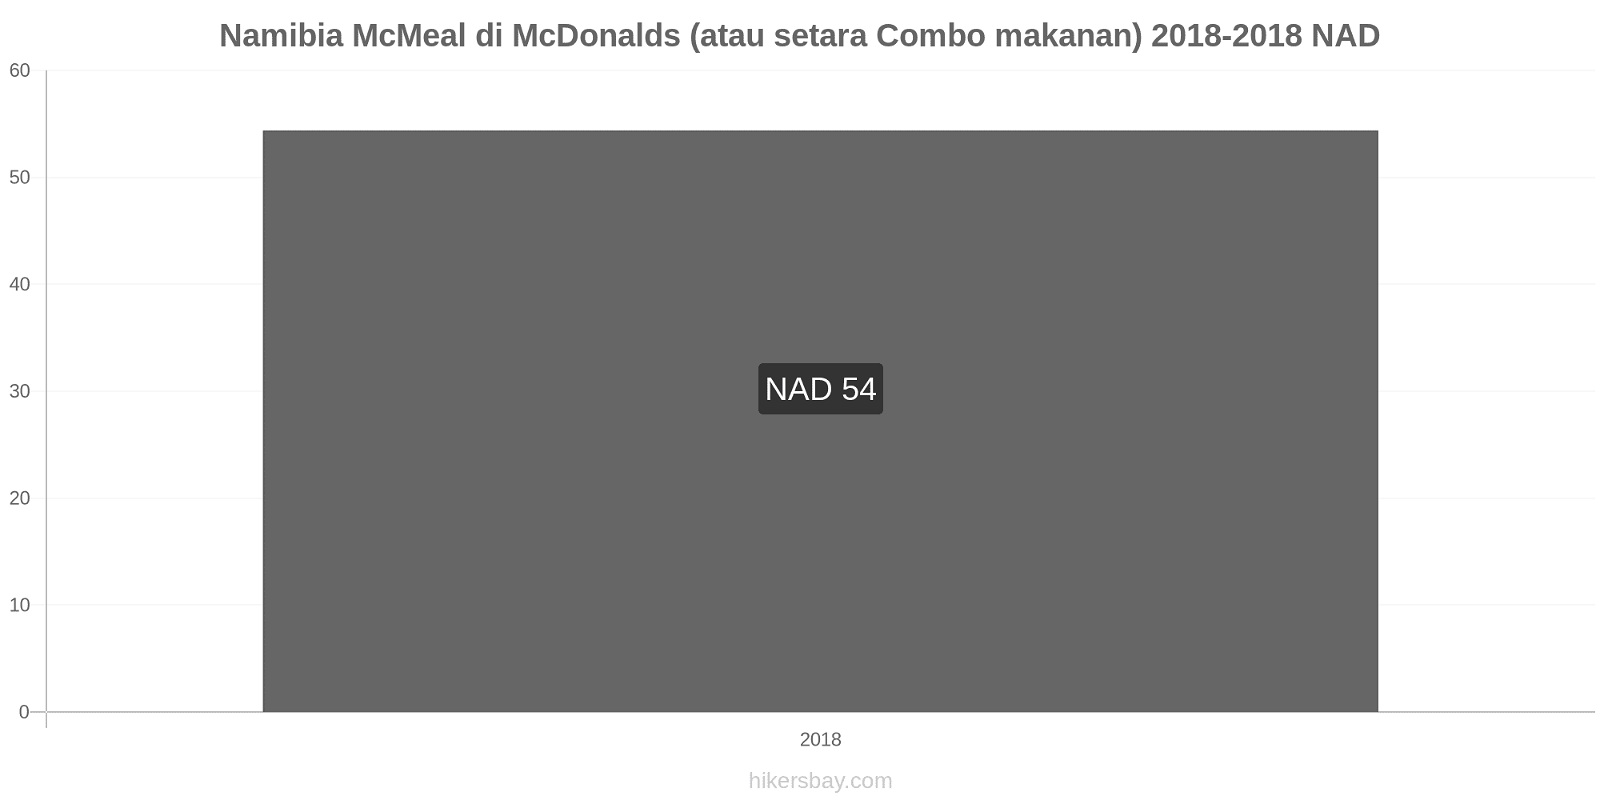 Namibia perubahan harga McMeal di McDonalds (atau setara Combo makanan) hikersbay.com